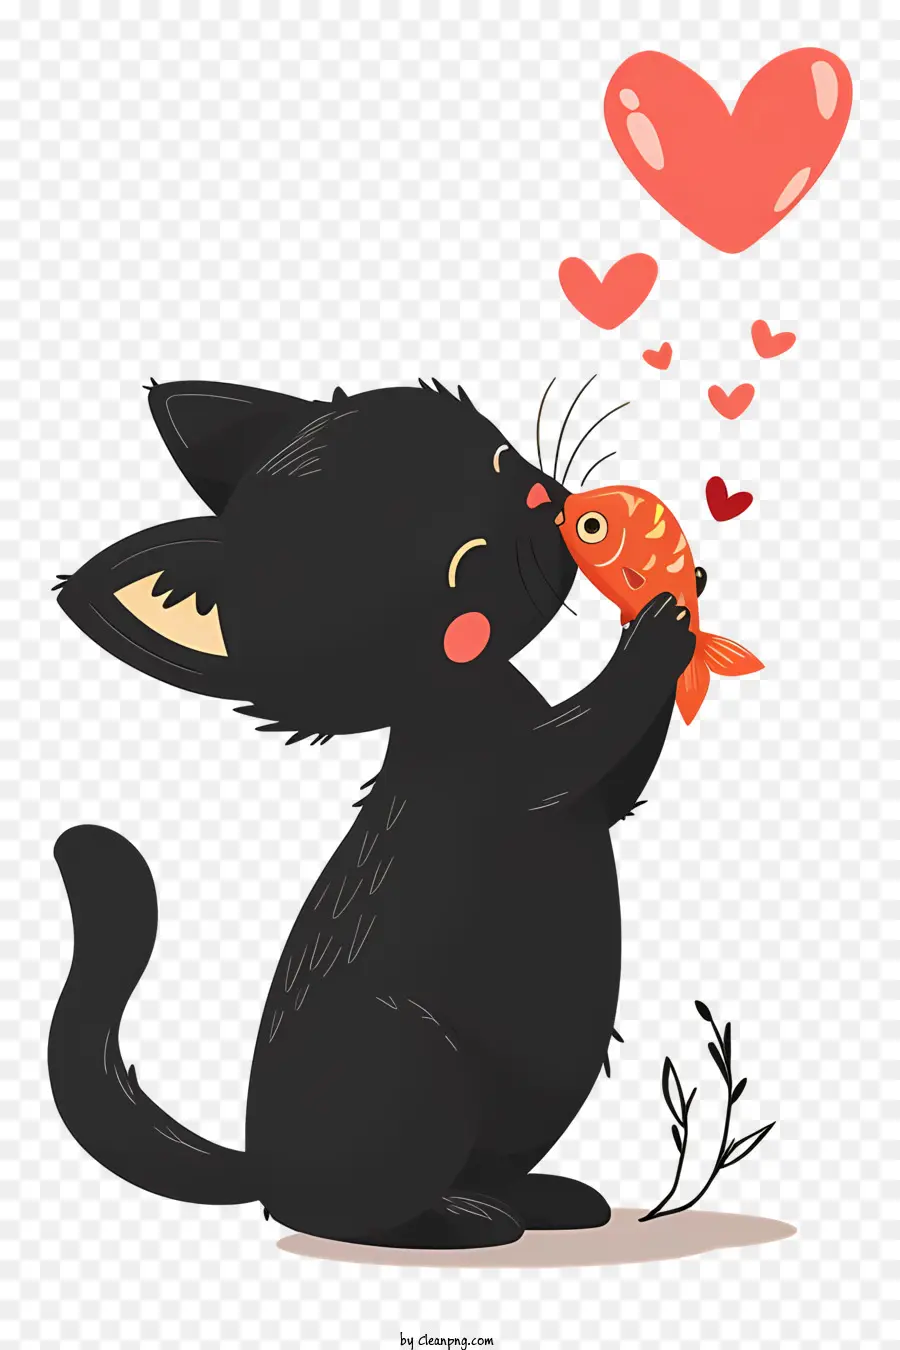 cat kissing fish black cat smiling cat cute cat tail curled